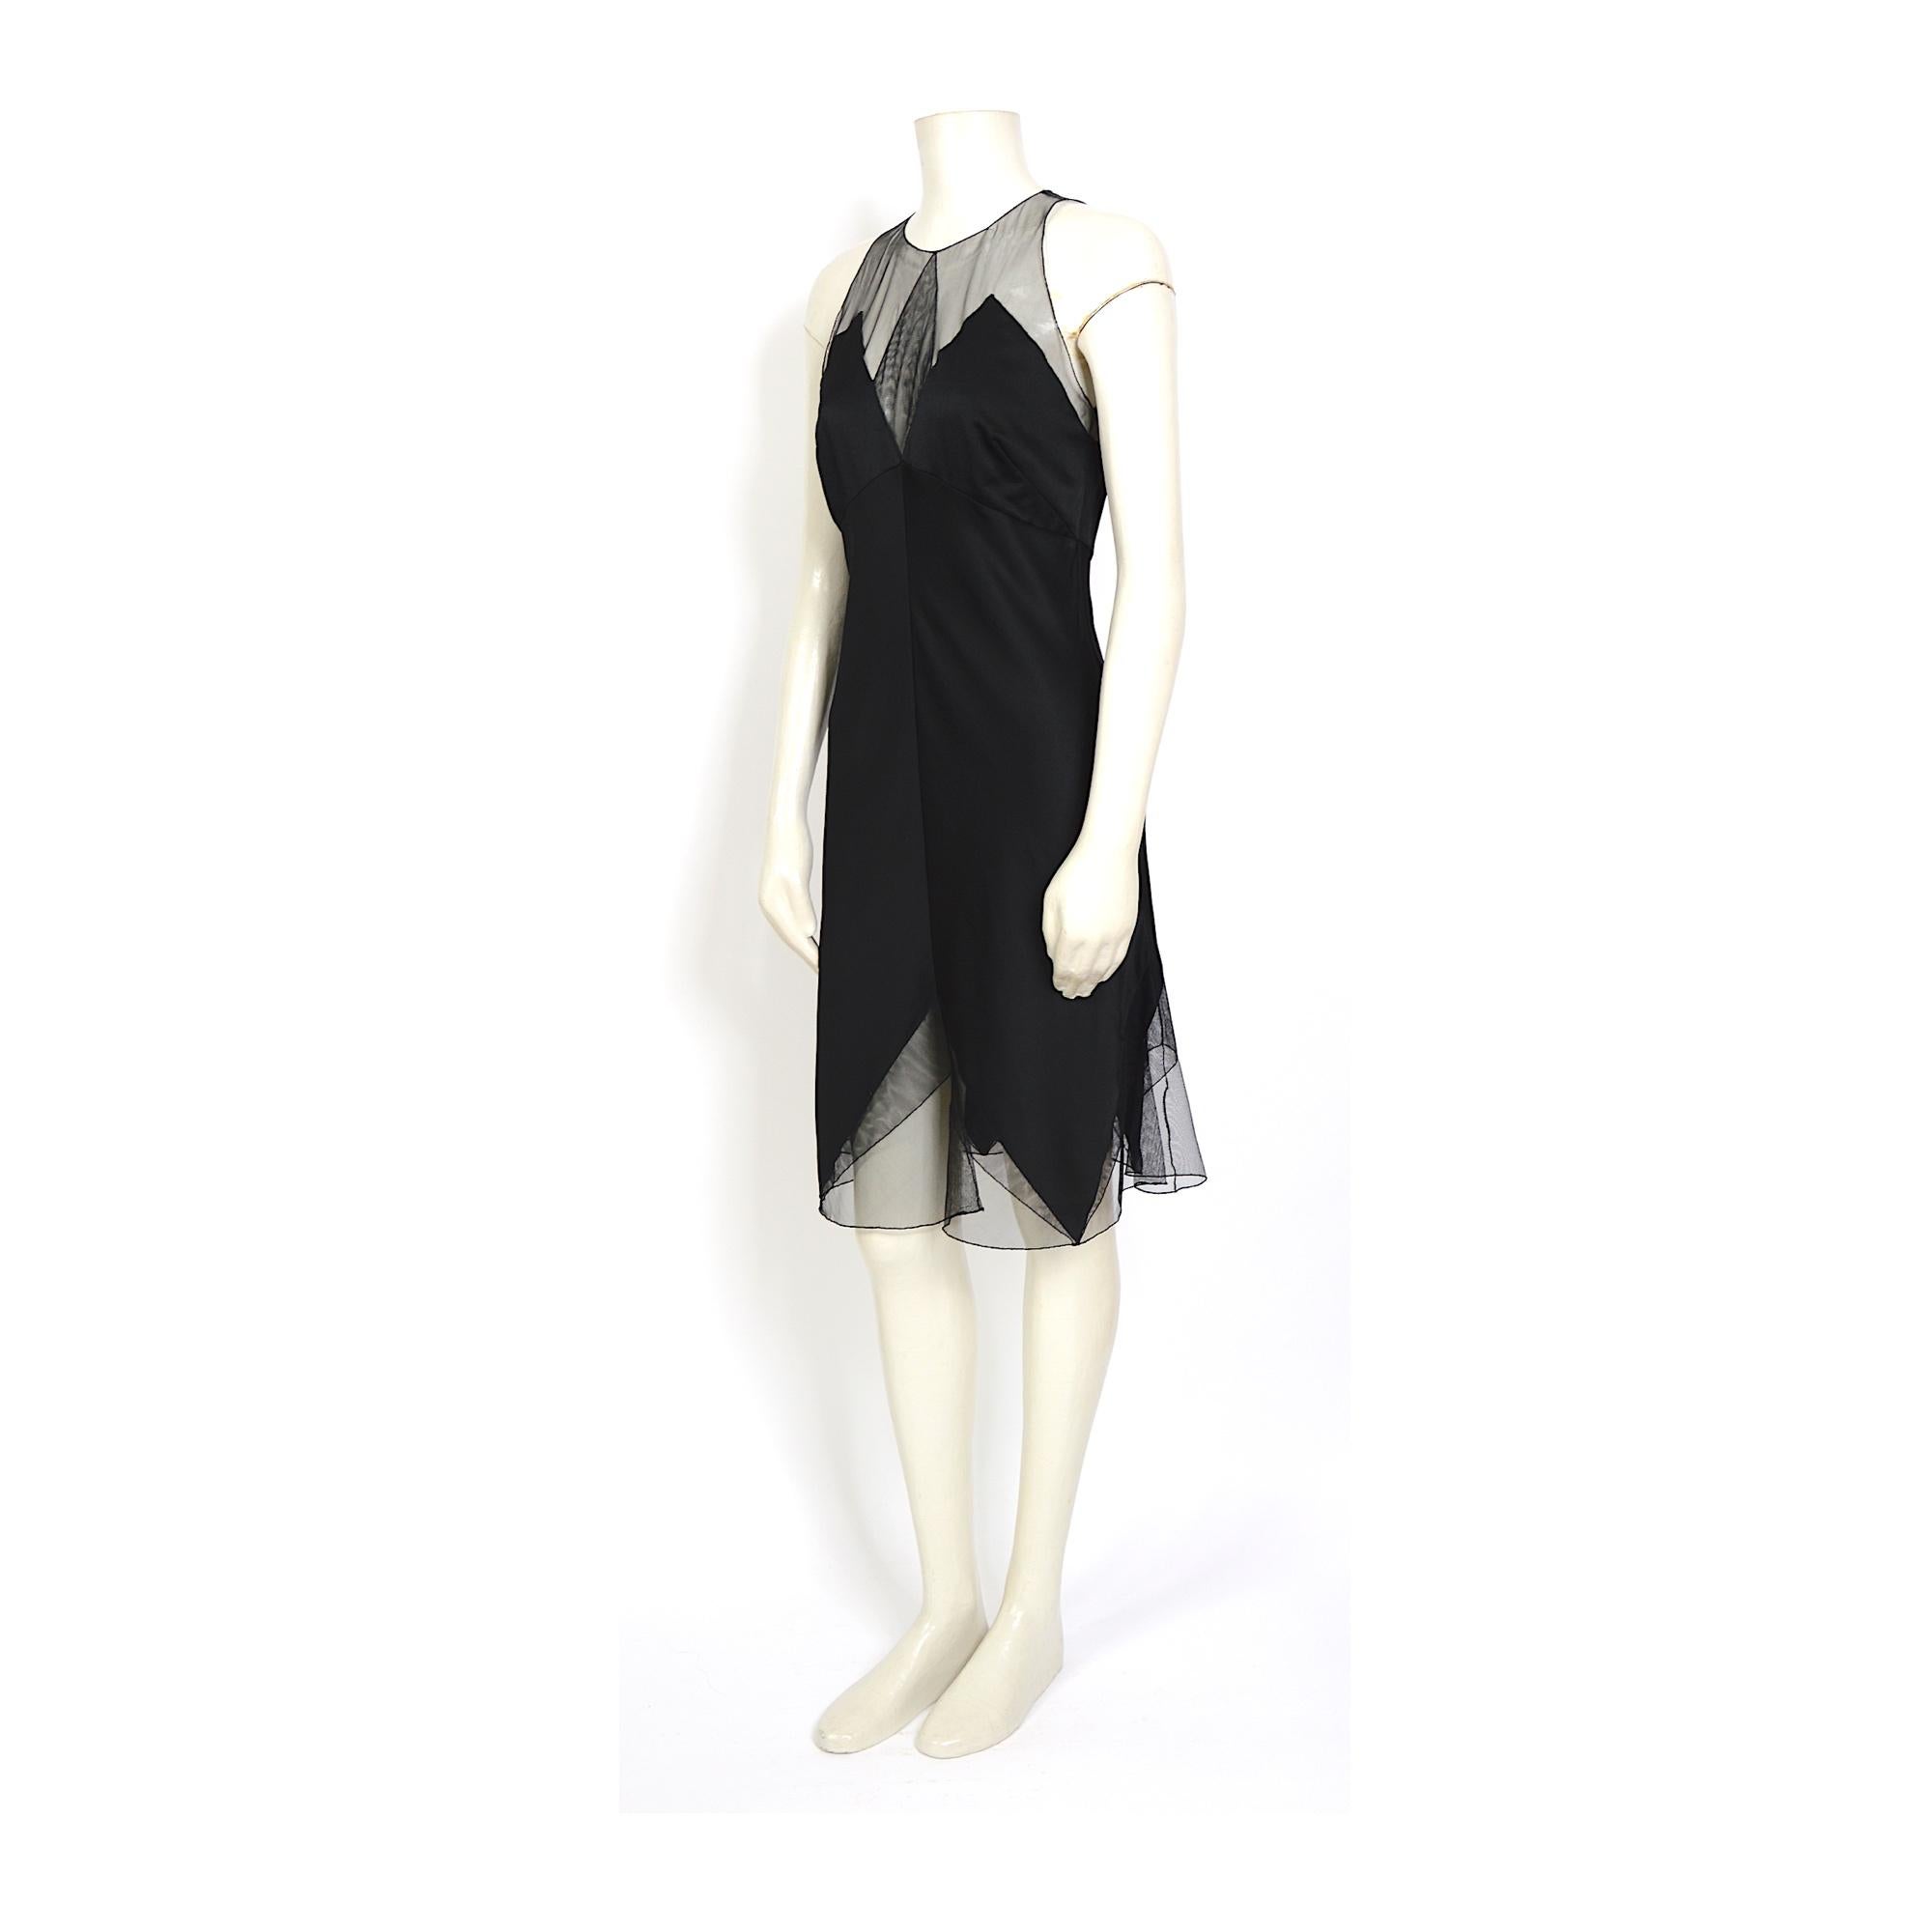 Black Karl Lagerfeld fall 1994/95 vintage black silk dress with matching top